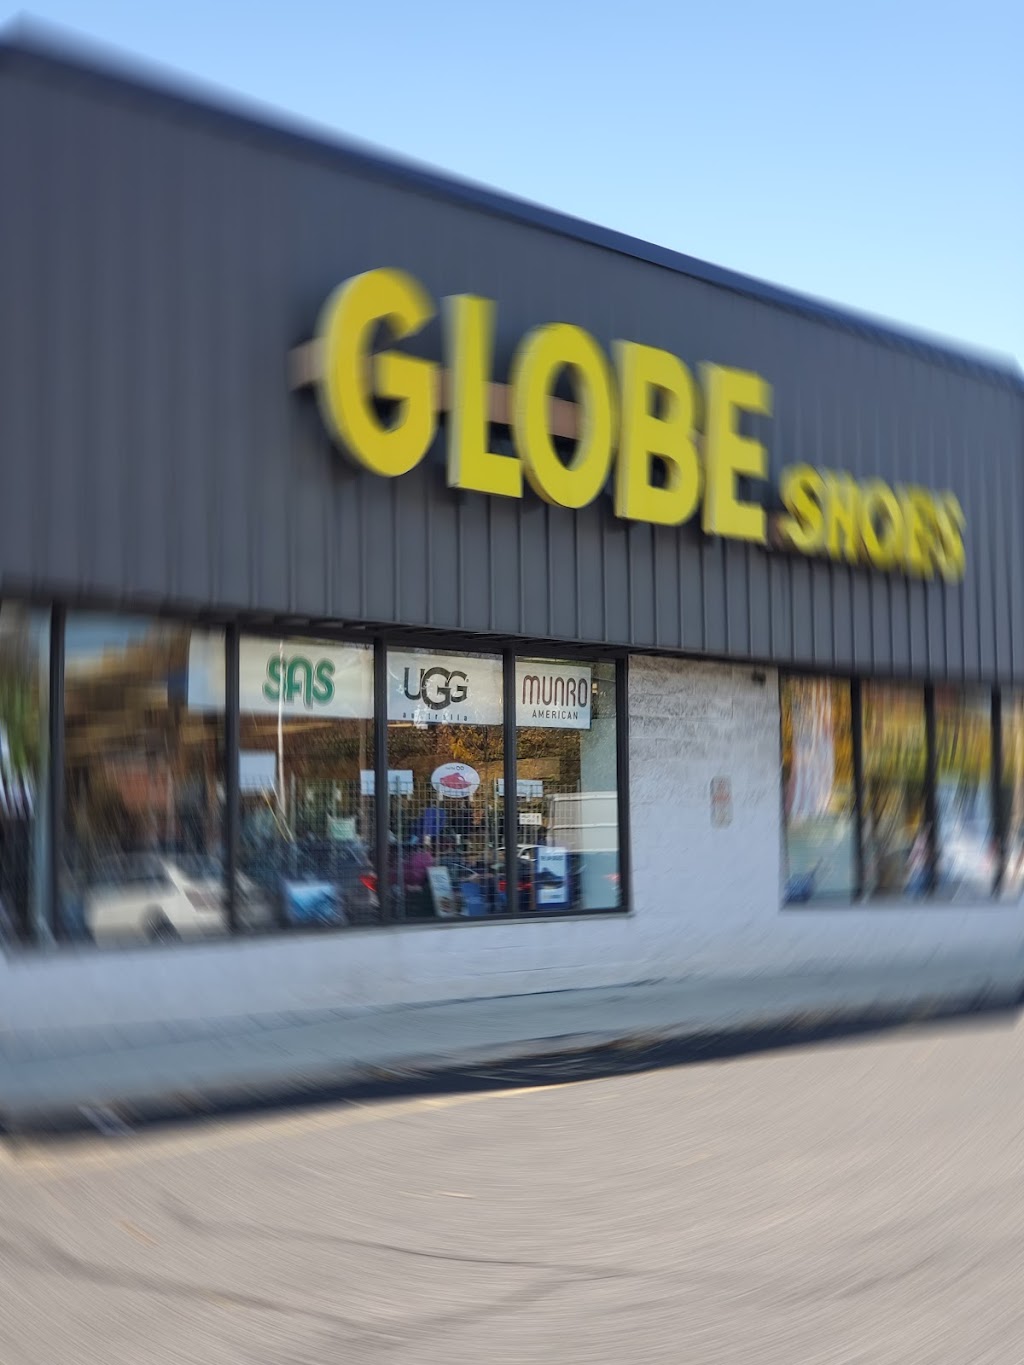 Globe Shoes | 111 Interstate Shop Center #32, Ramsey, NJ 07446 | Phone: (201) 843-6515